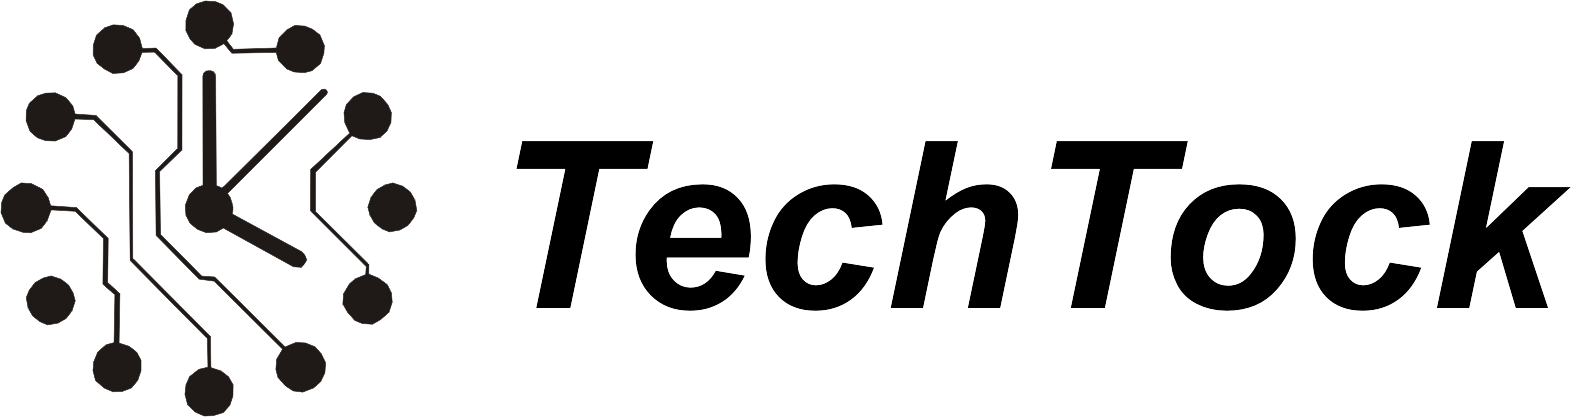 TechTock Trademark mono transparent